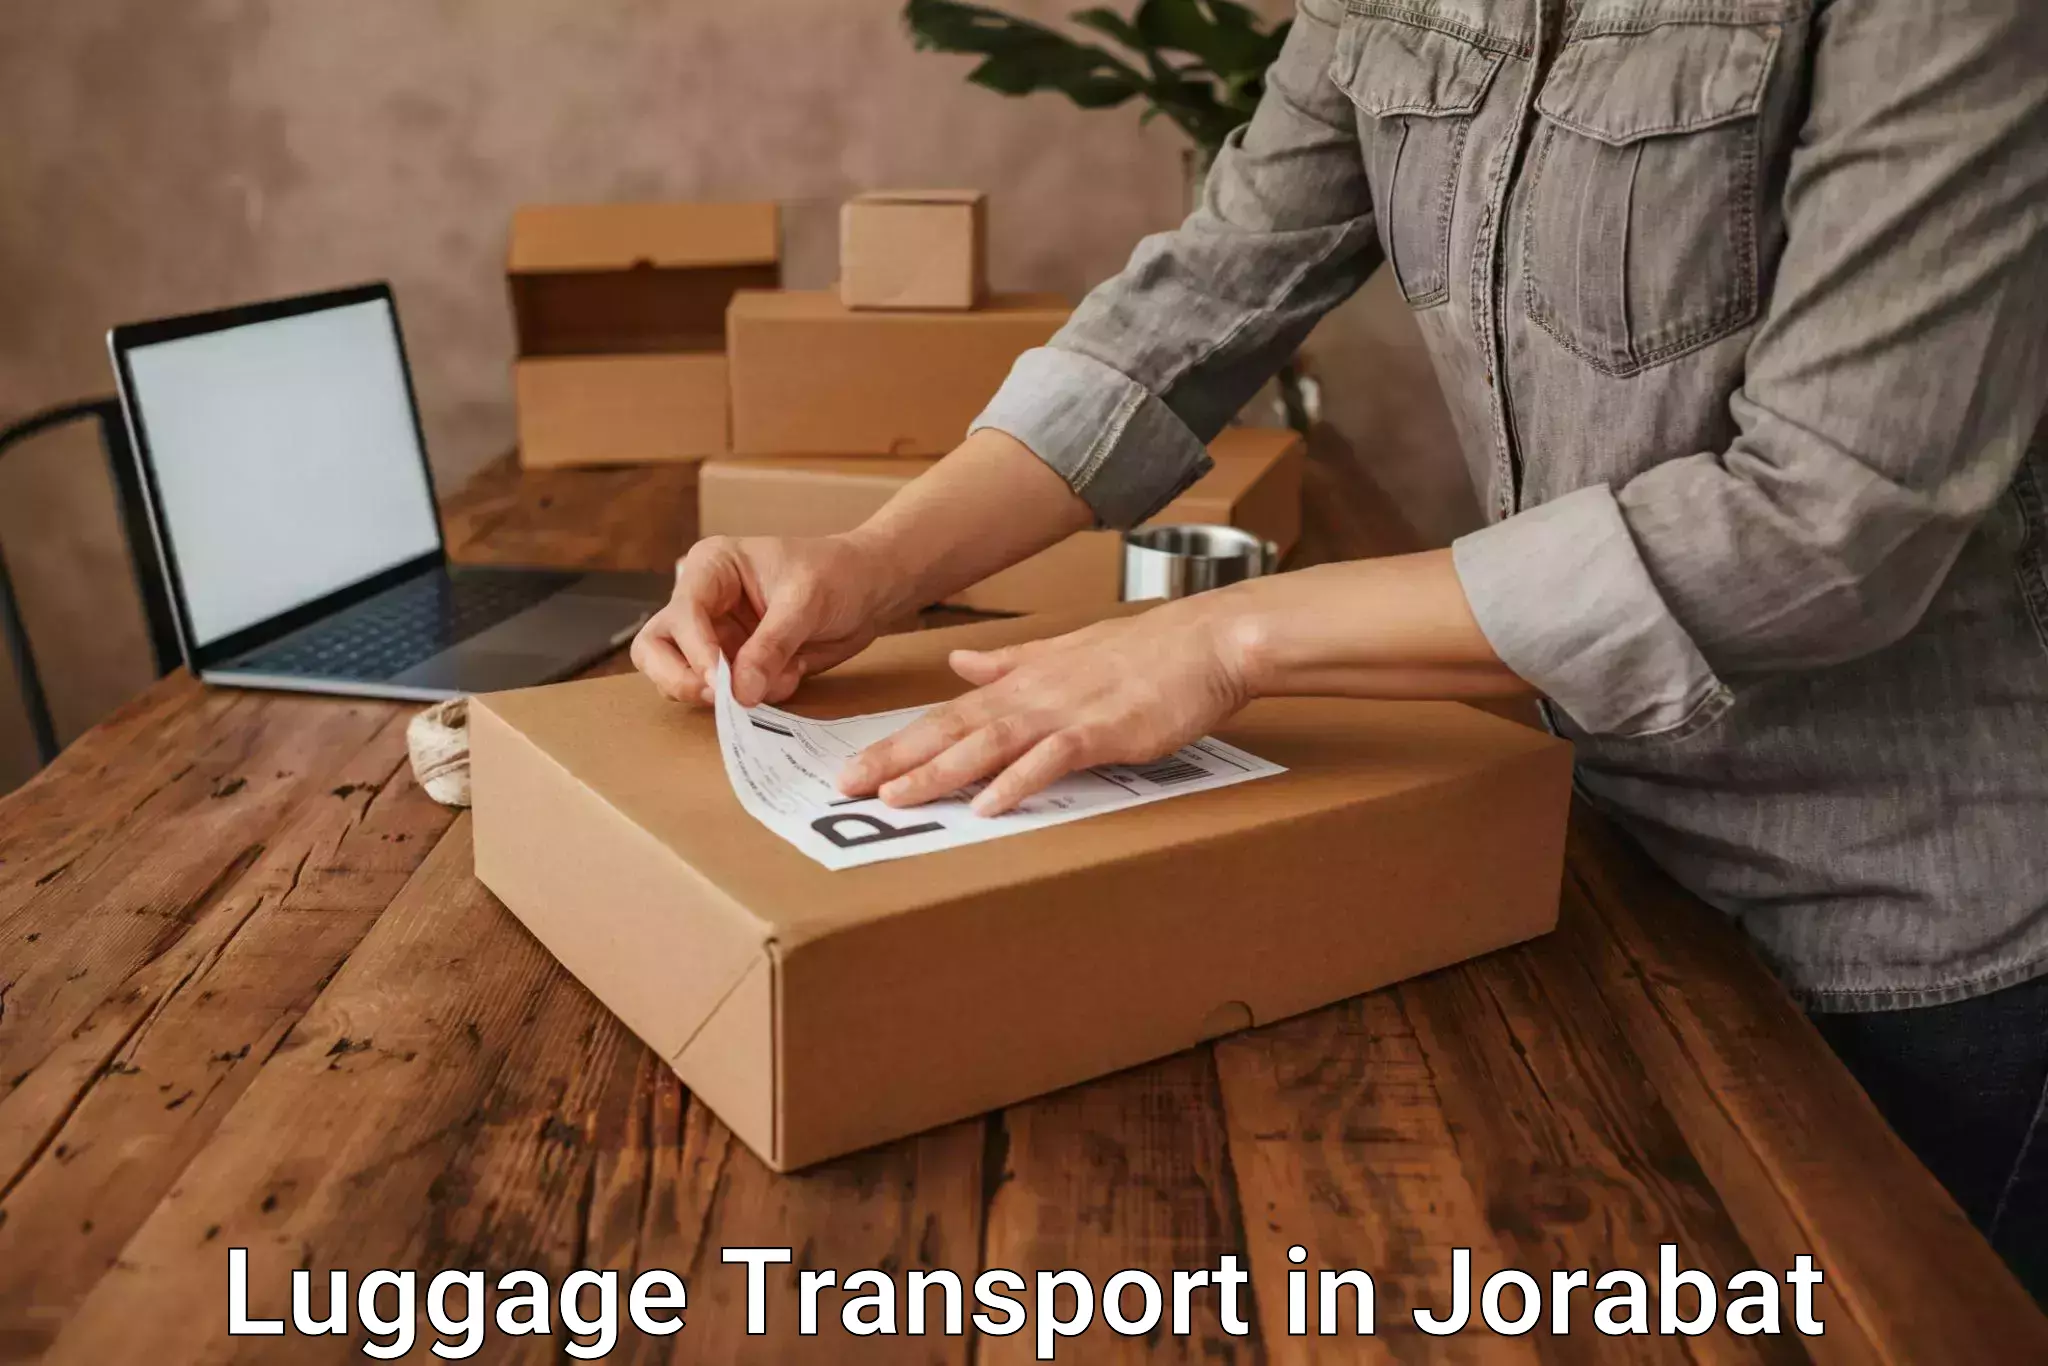 Luggage shipment specialists in Jorabat